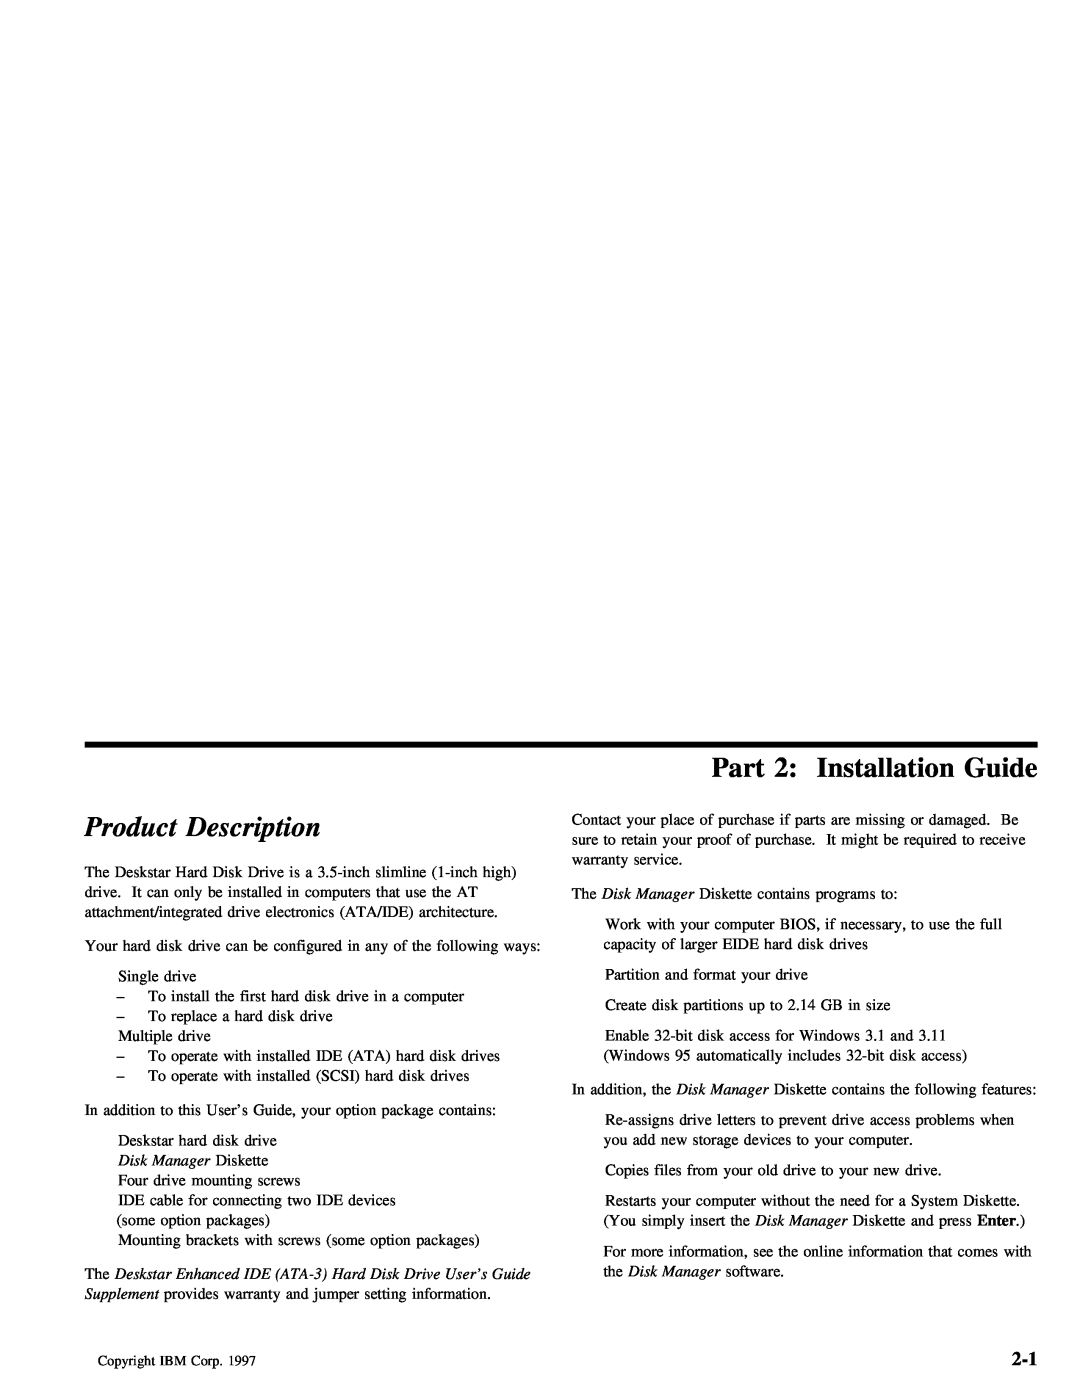 IBM ATA-3 manual Description, Product, Installation, Part, Guide 